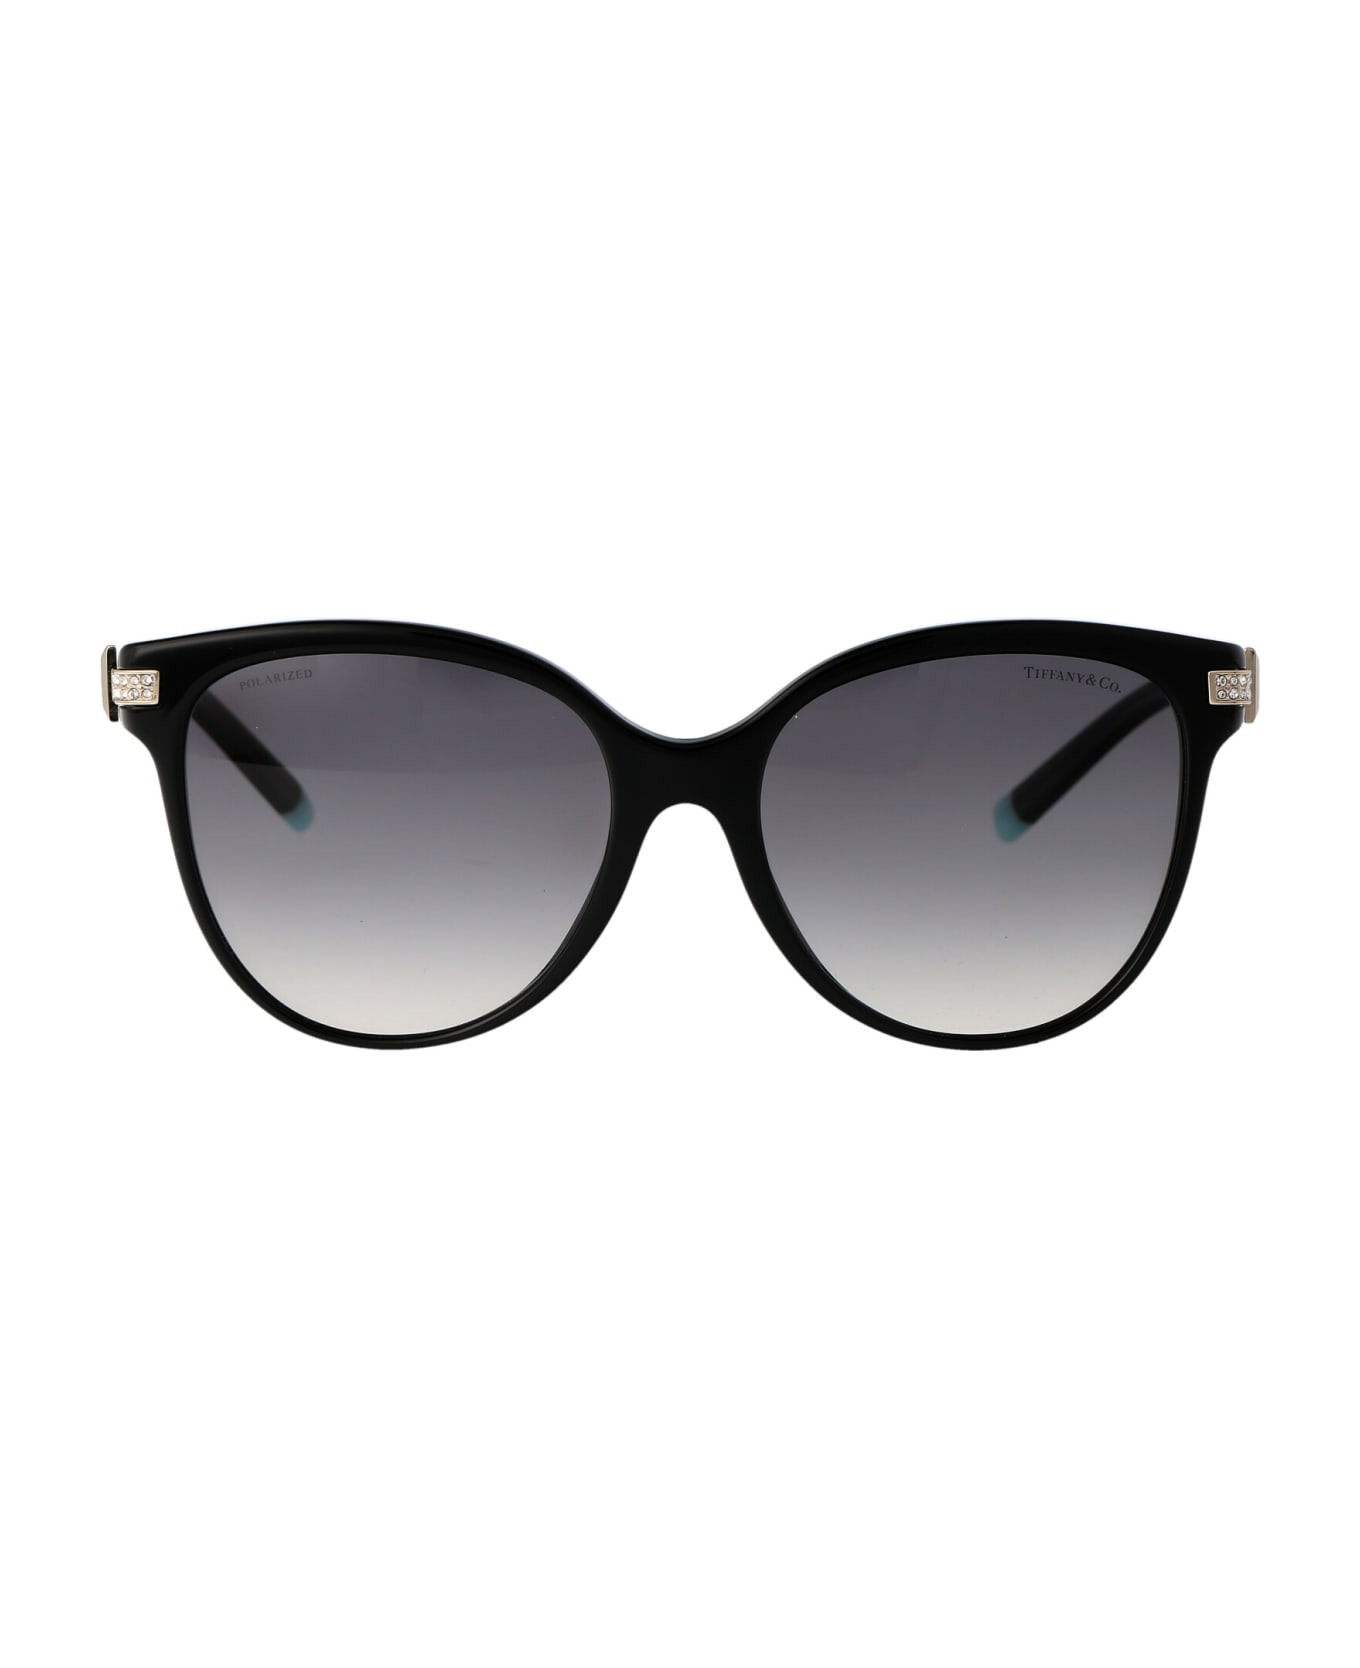 Tiffany & Co. 0tf4193b Sunglasses - 8001T3 Black